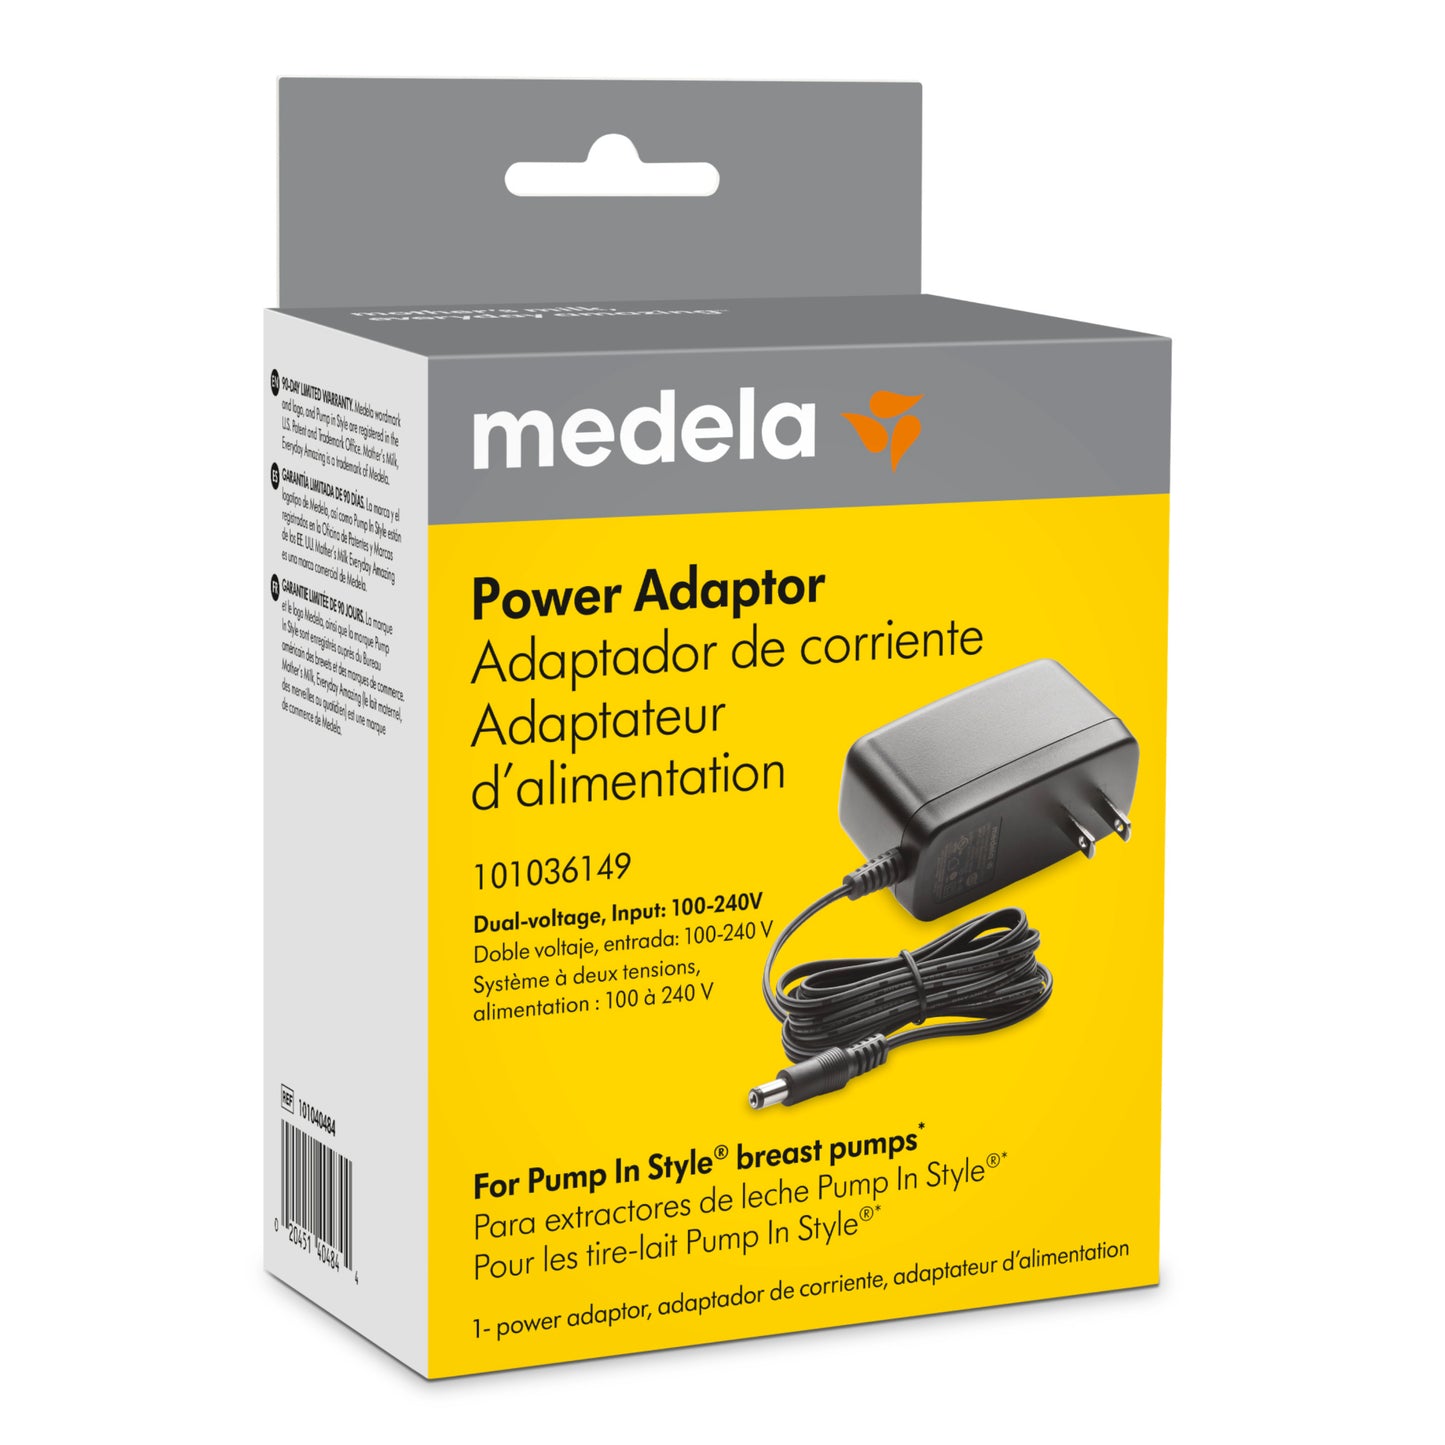 Medela Power Adaptor for 9 Volt Pump In Style Breast Pumps